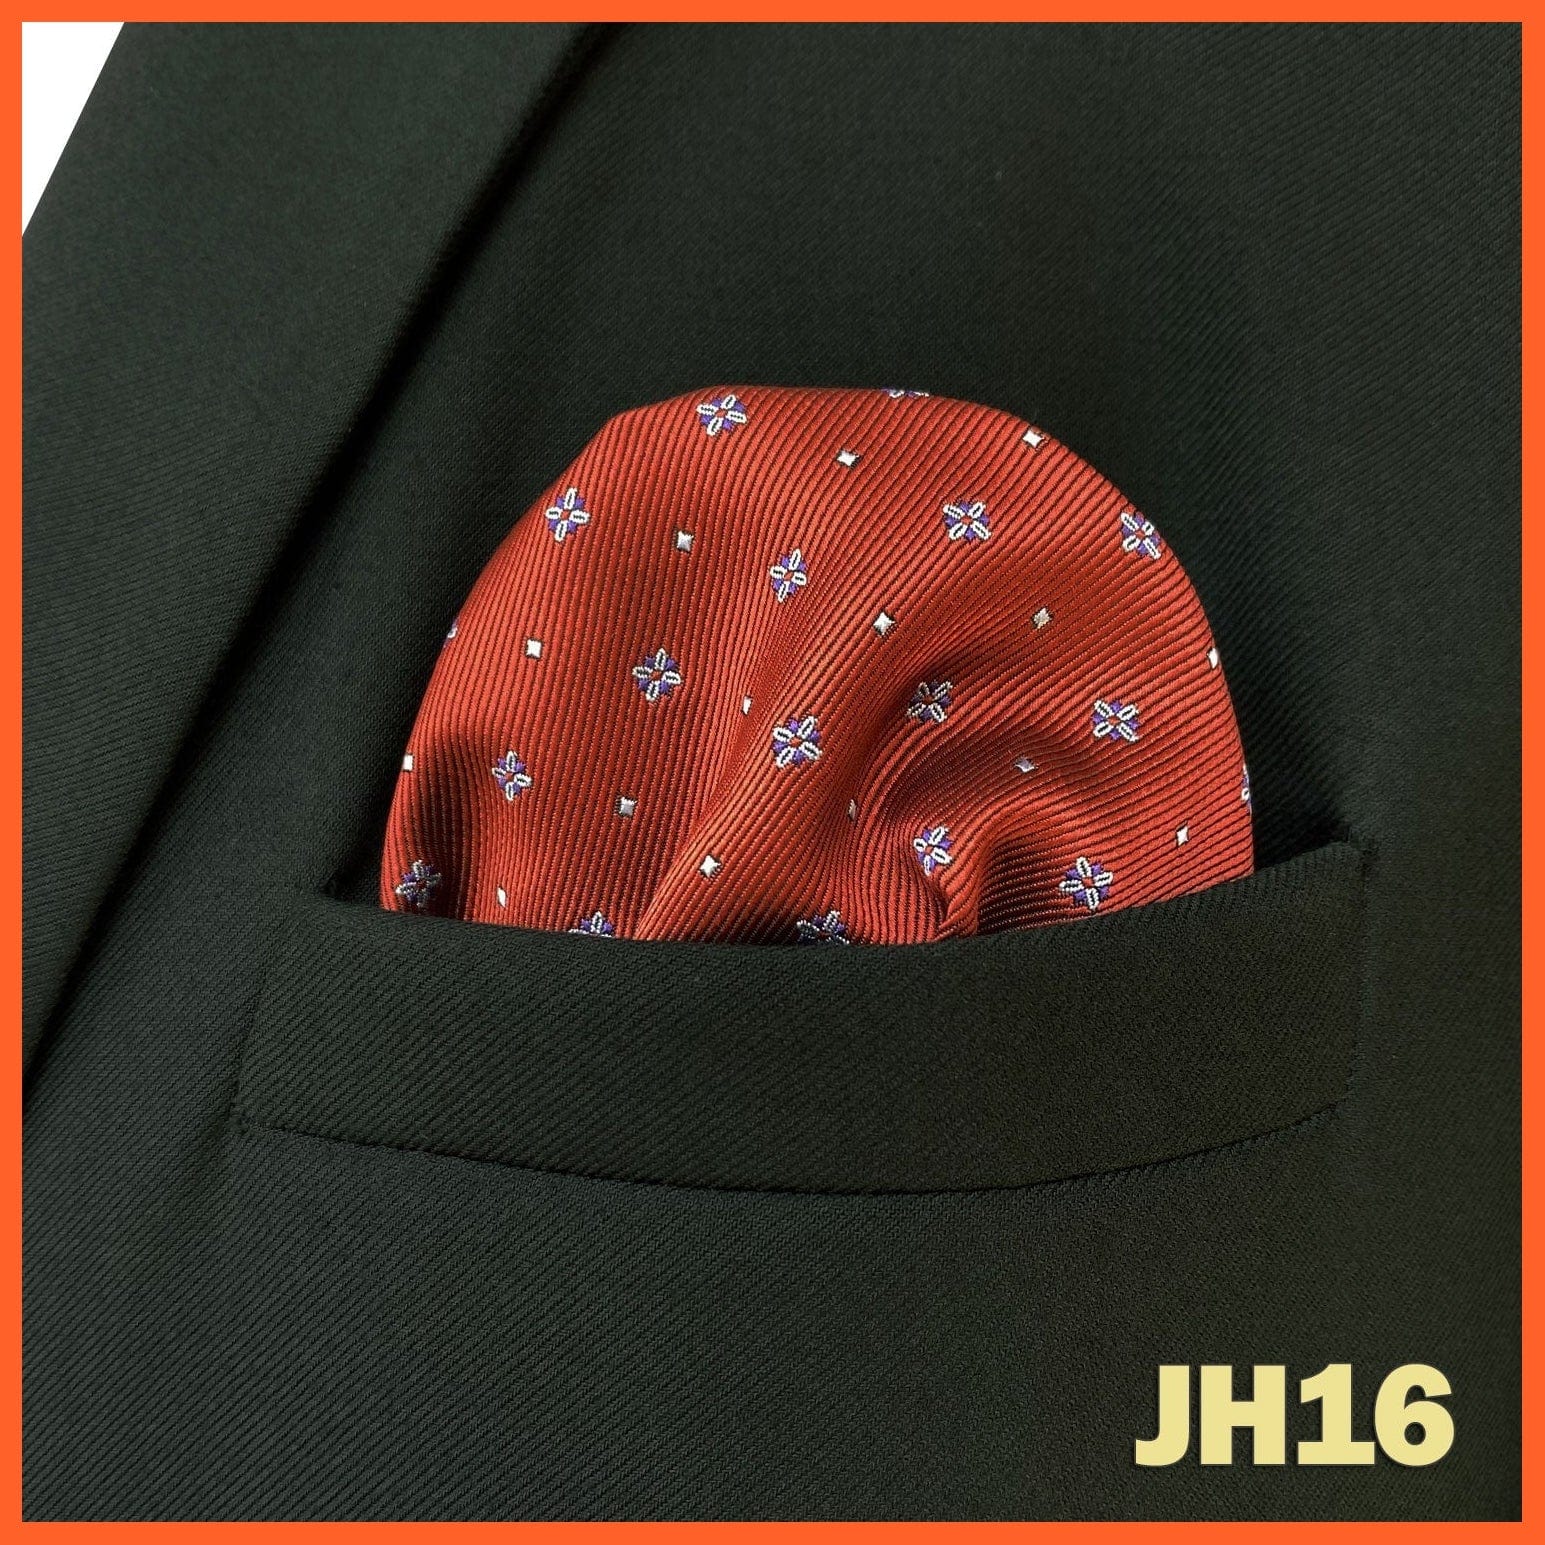 whatagift.com.au Handkerchief JH16 Colorful Multicolor Pocket Square Men's Classic Striped Handkerchief